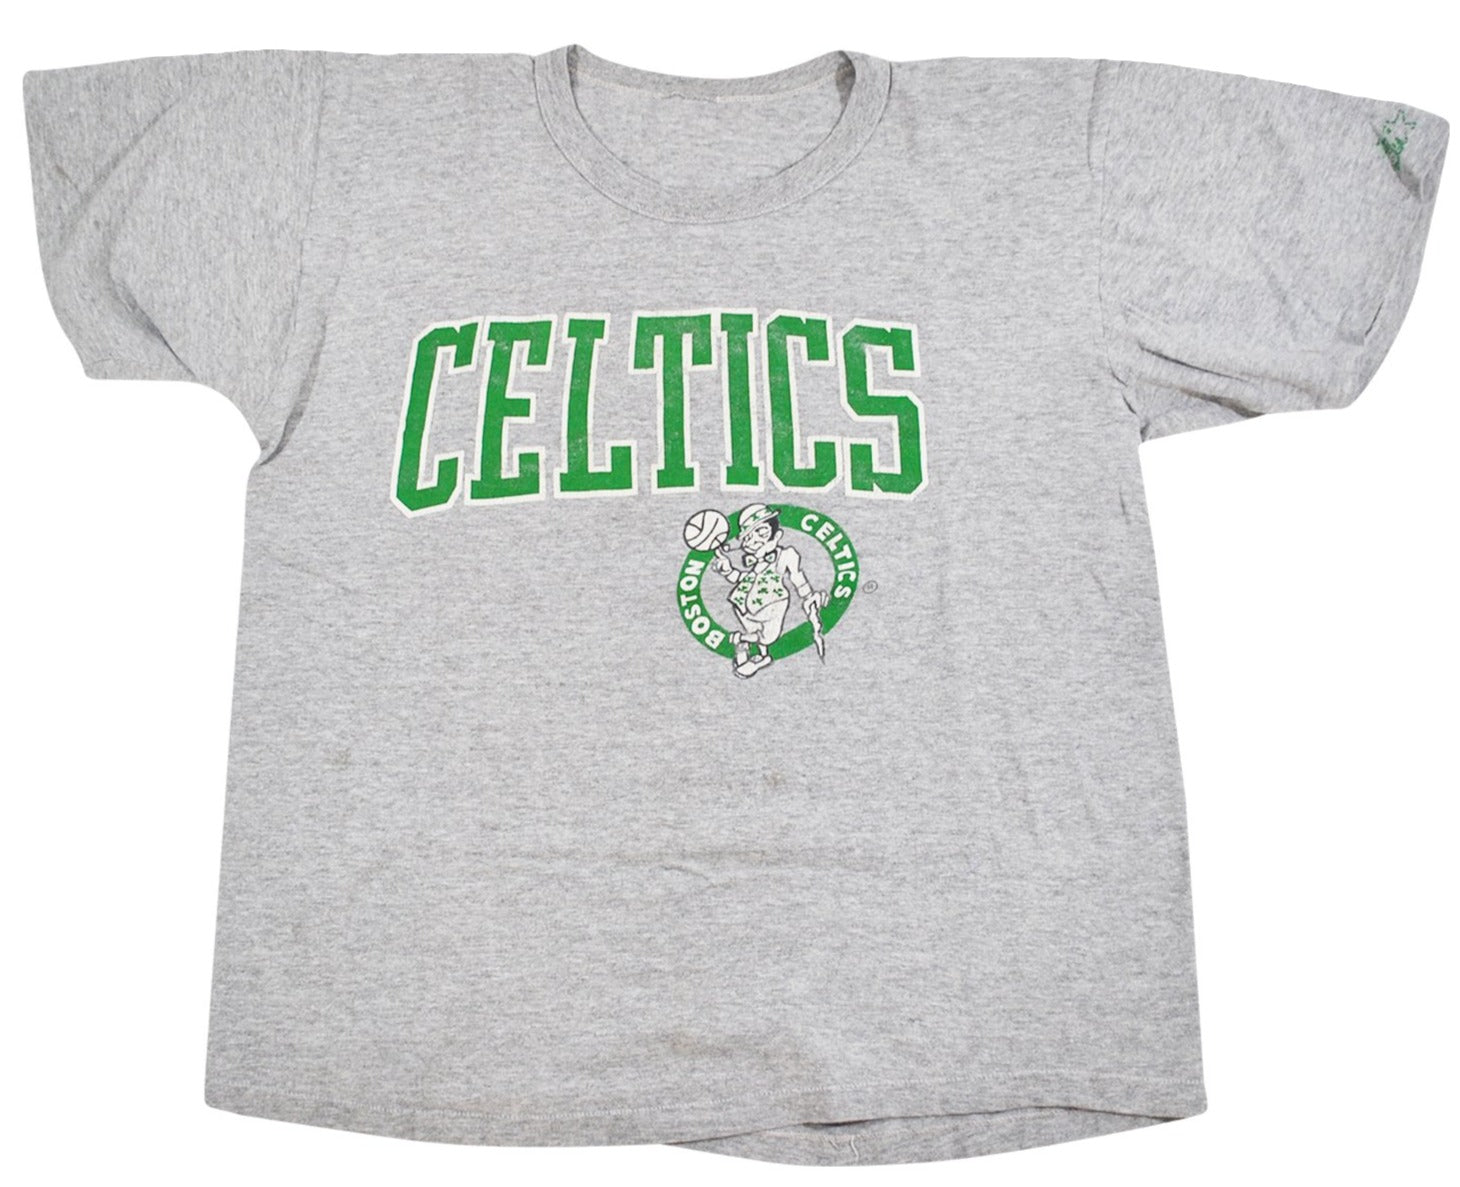 vintage celtics t shirt